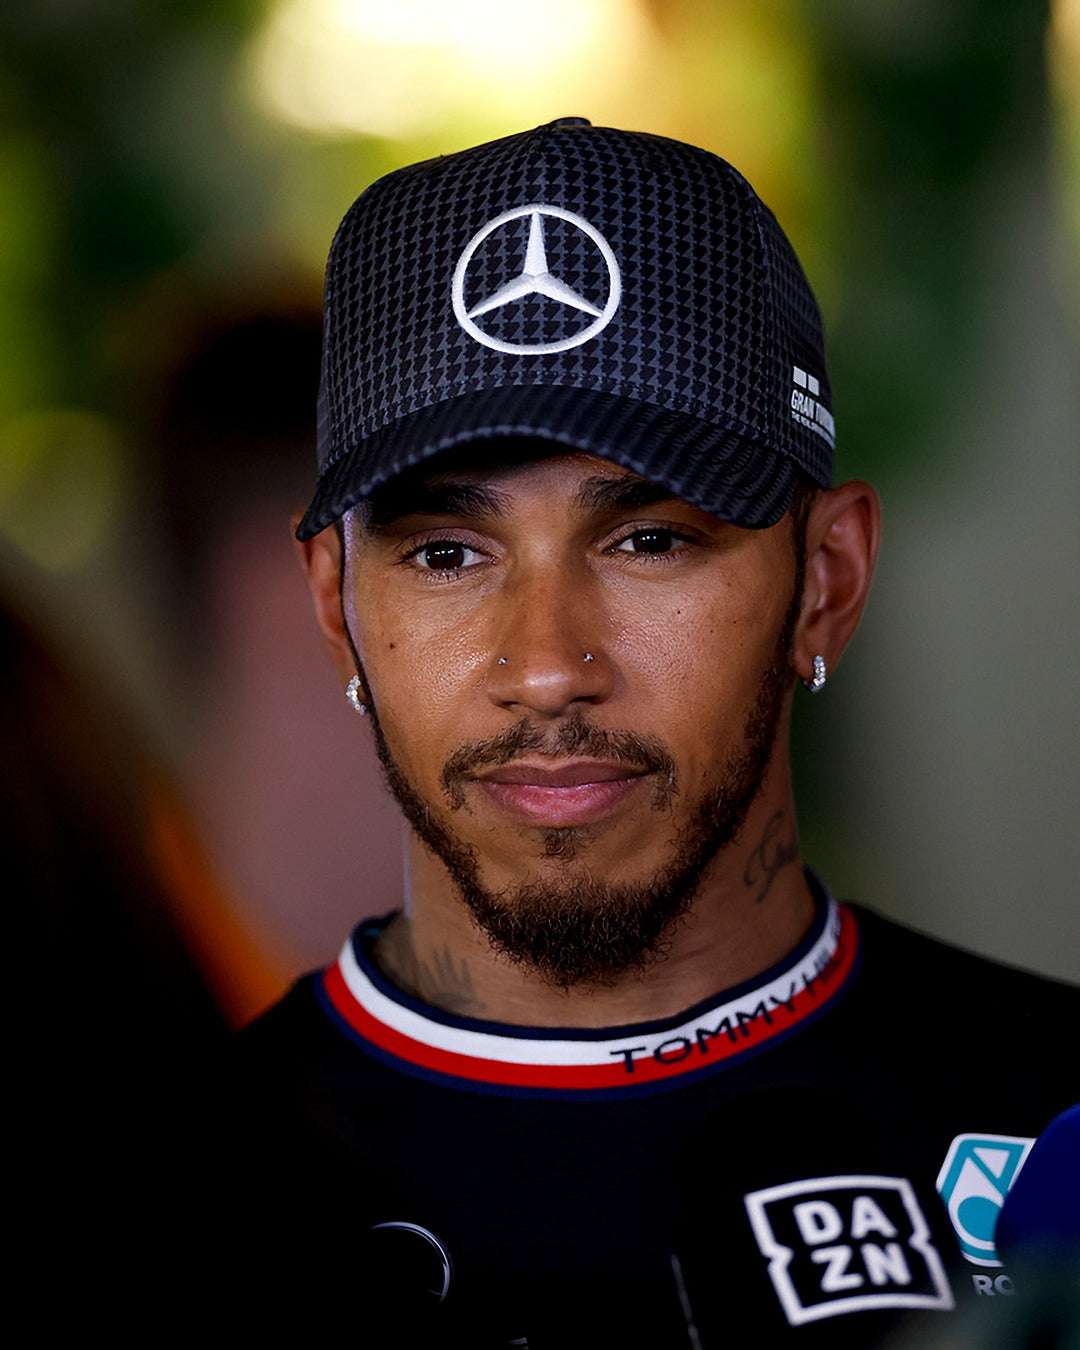 2023 Mercedes AMG Motorsport F1™ Team Lewis Hamilton Driver Cap - Kids - Black